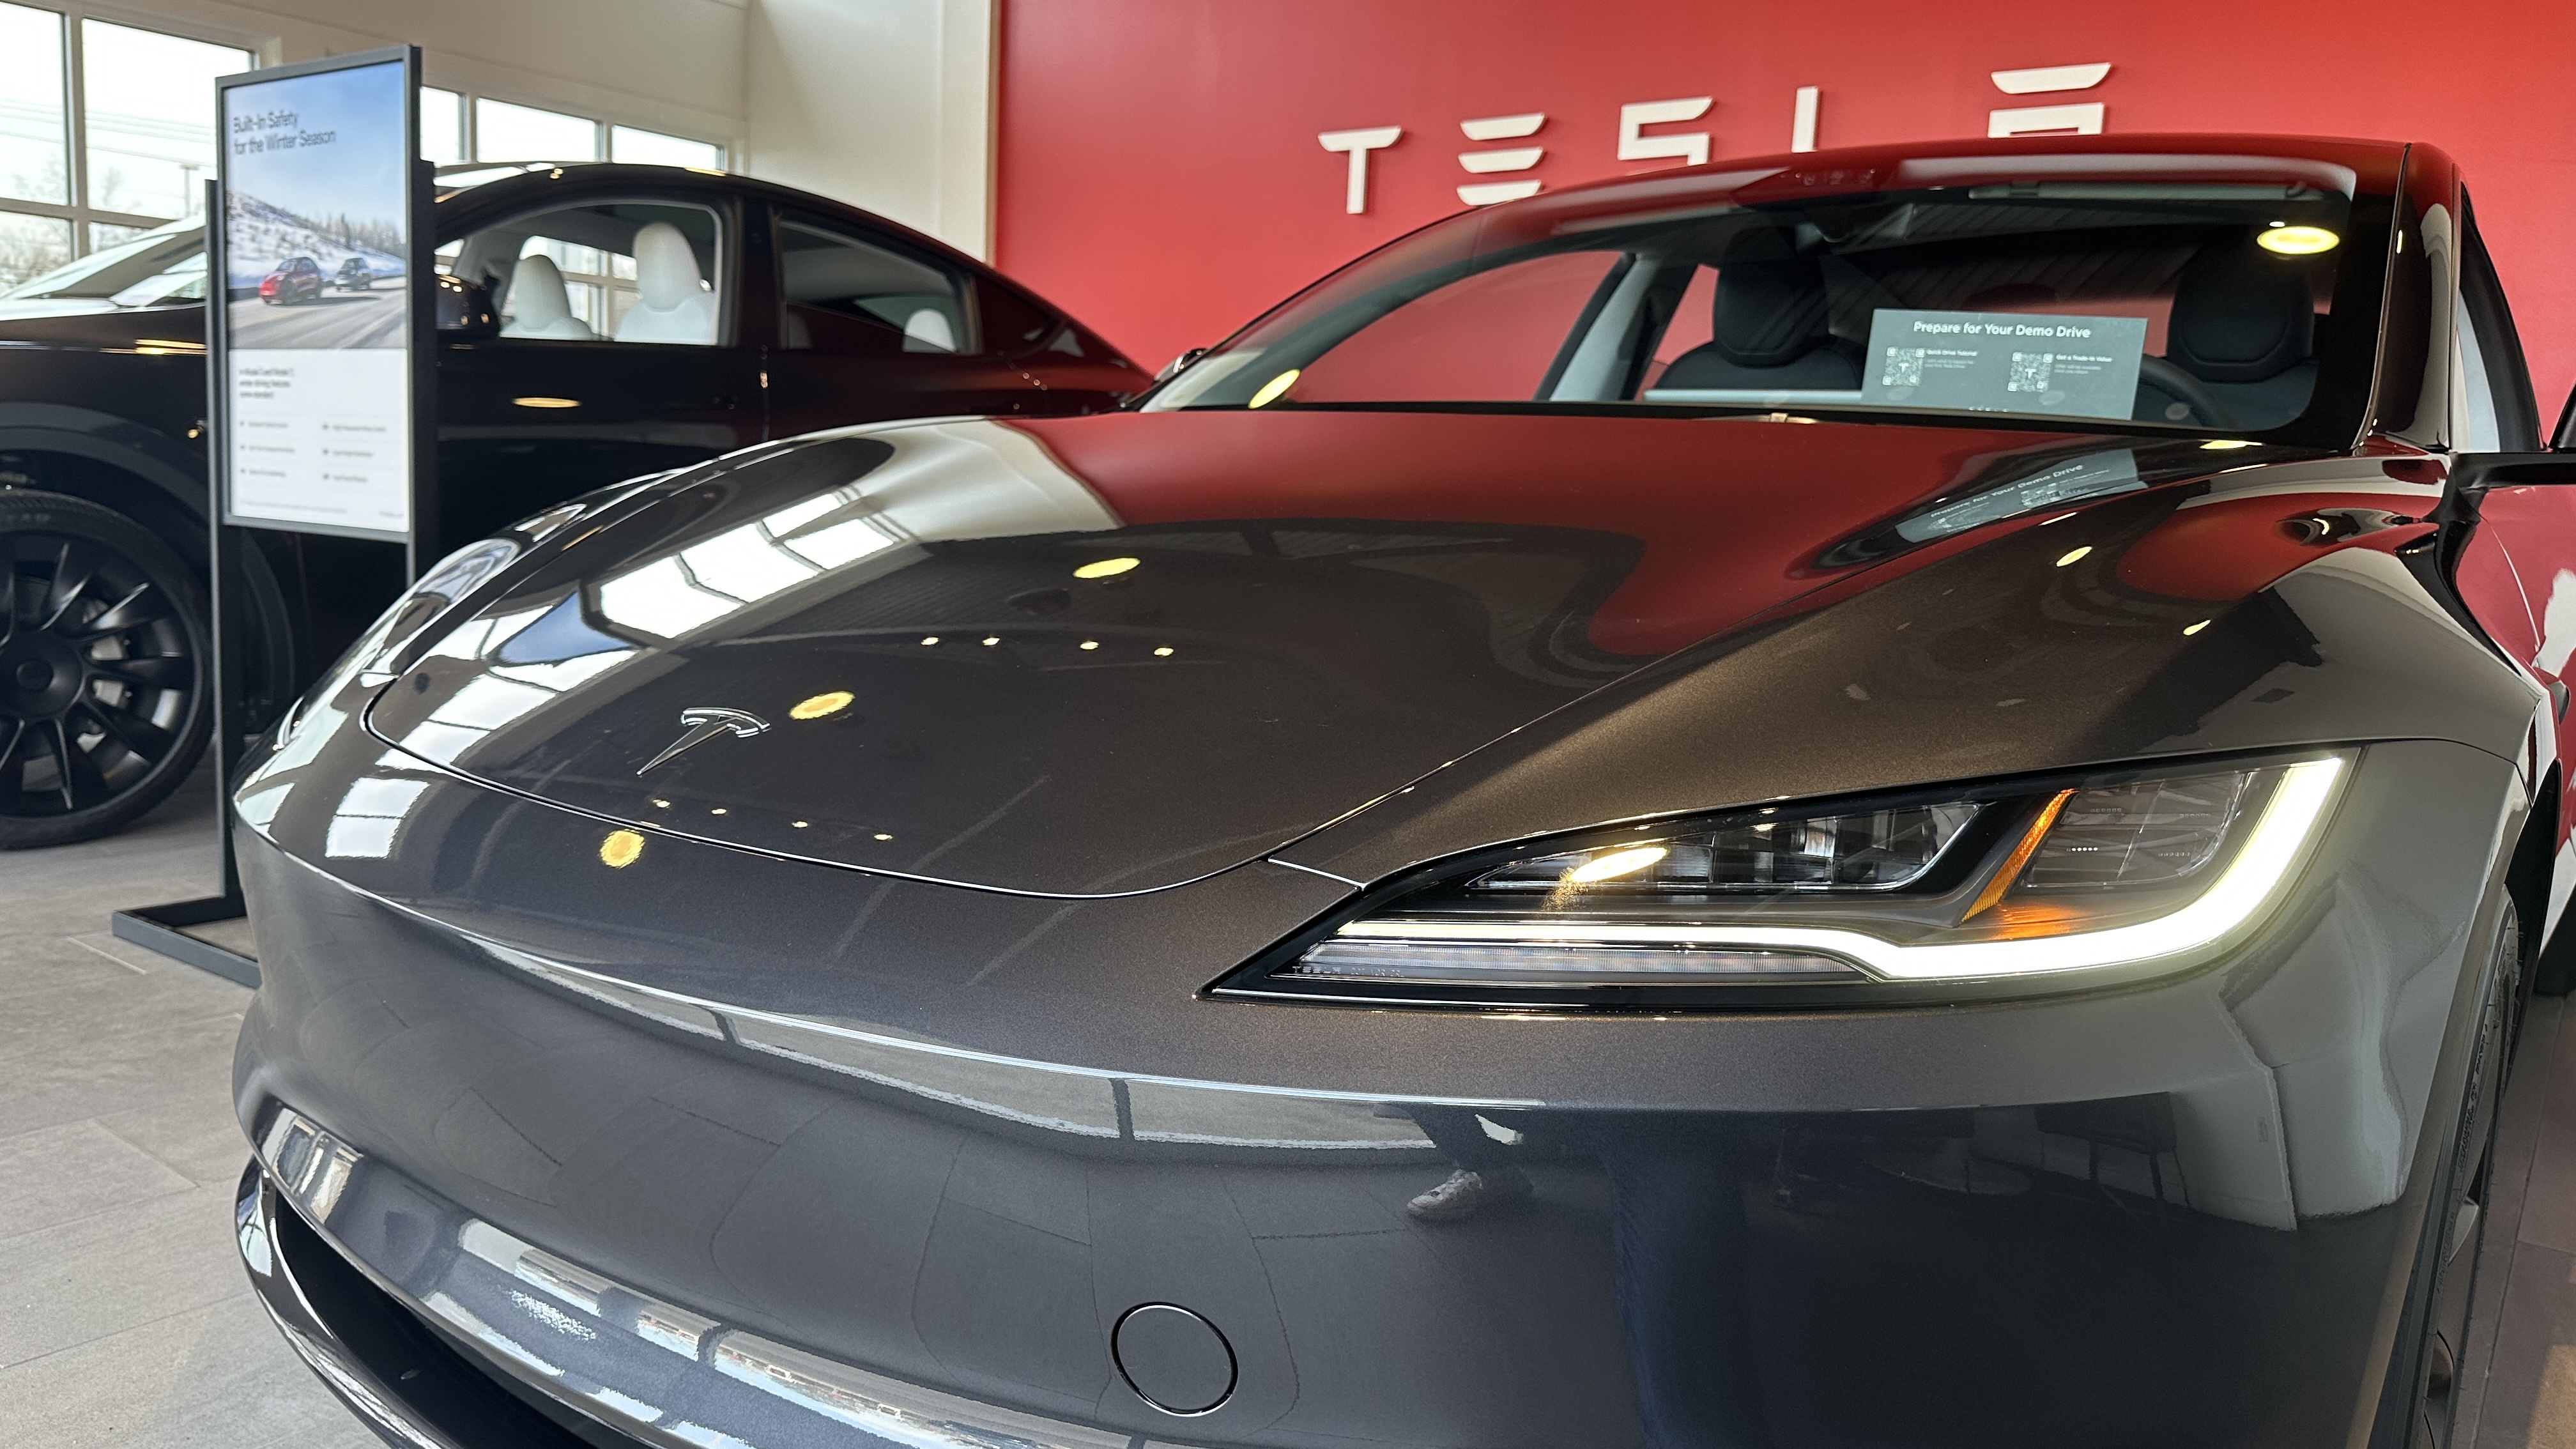 <a href="http://superveloce.net/news/tesla-unveils-model-3-performance-ludicrous">Tesla Model 3</a> price